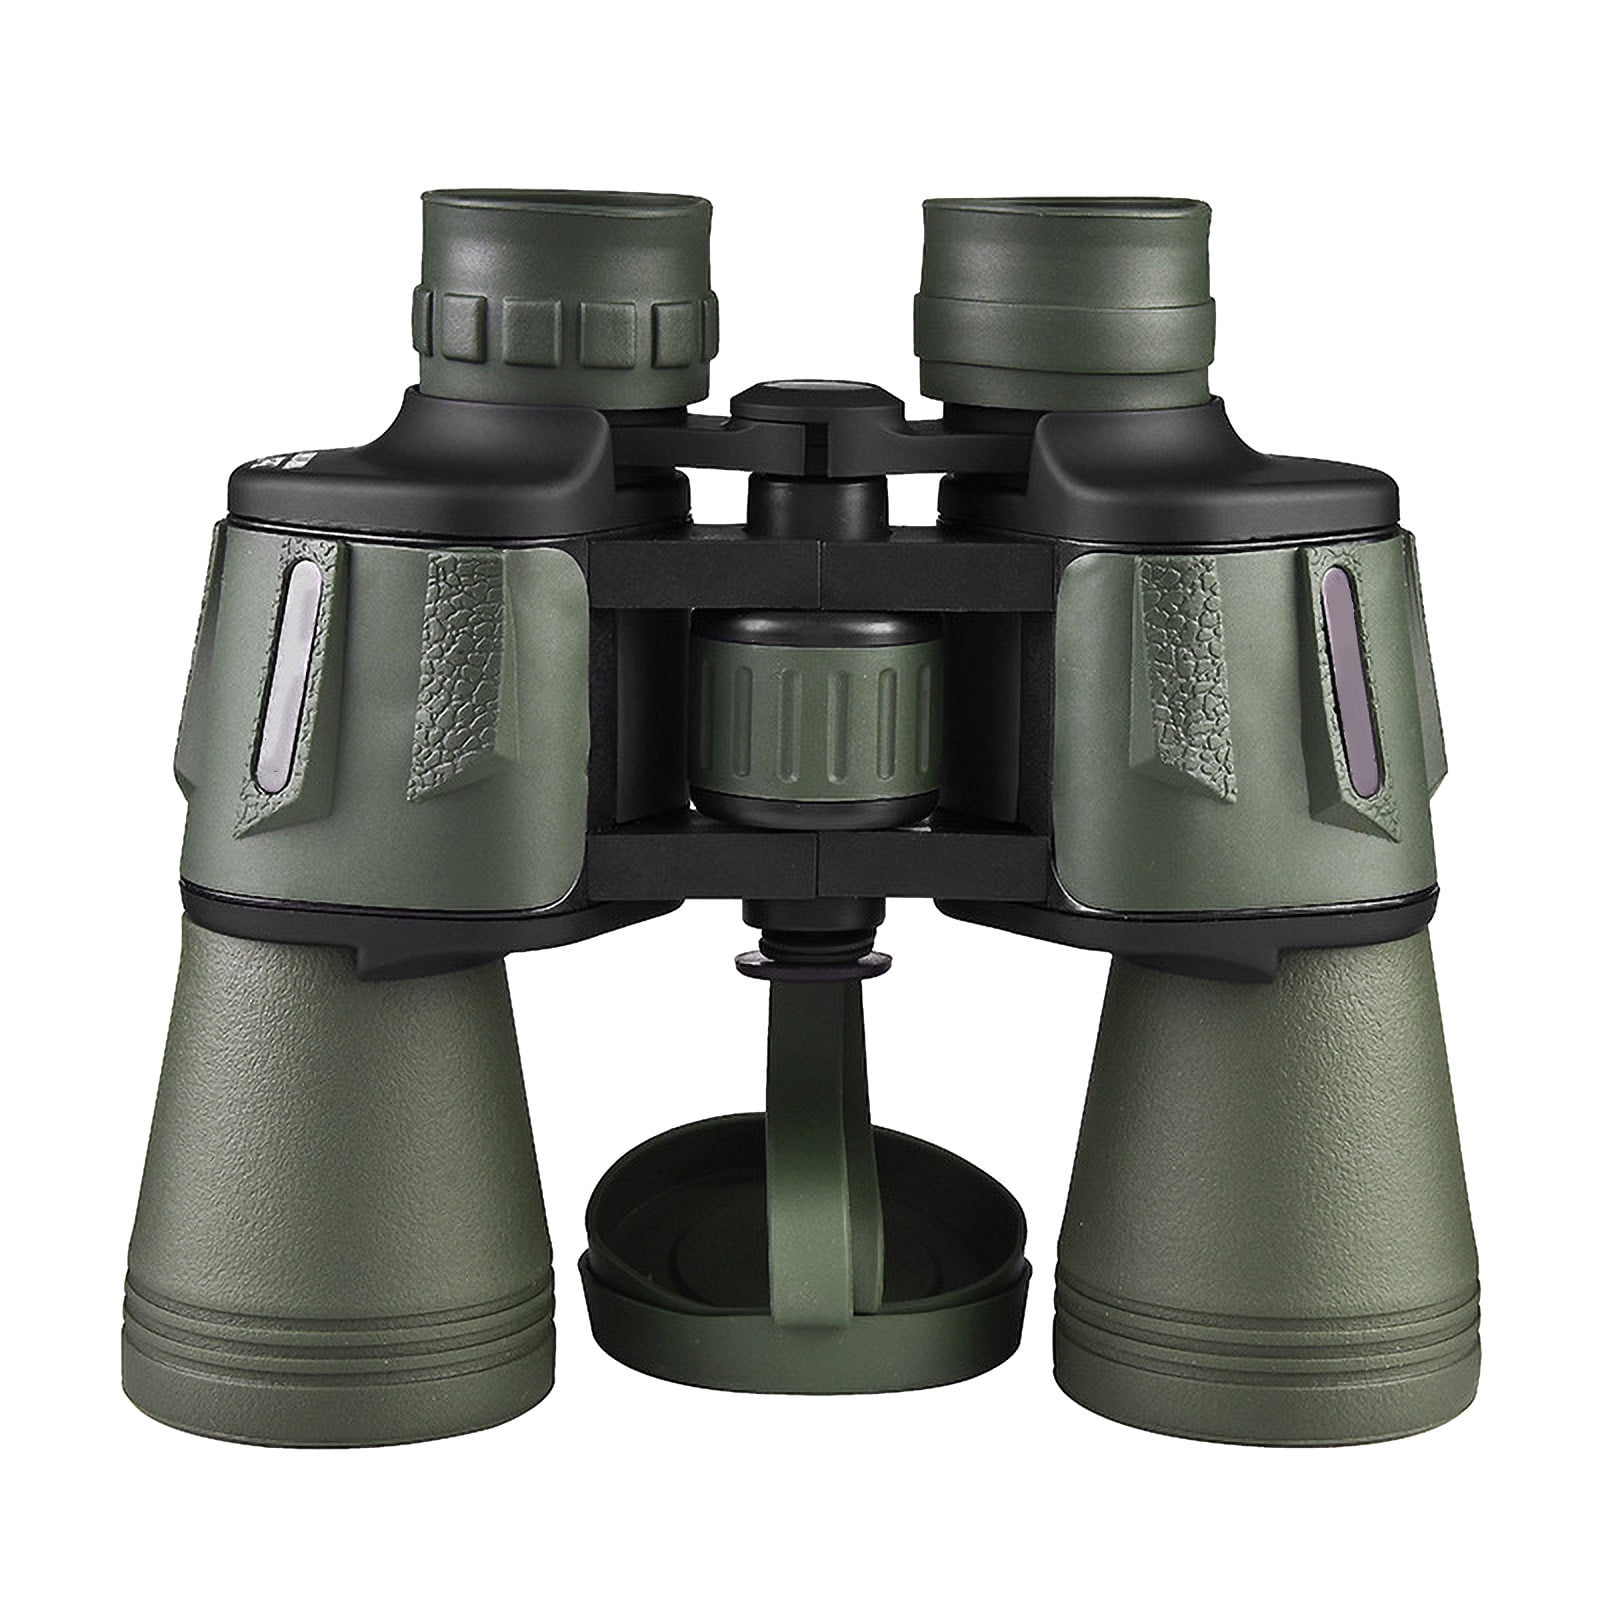 astronomy binoculars for amateurs